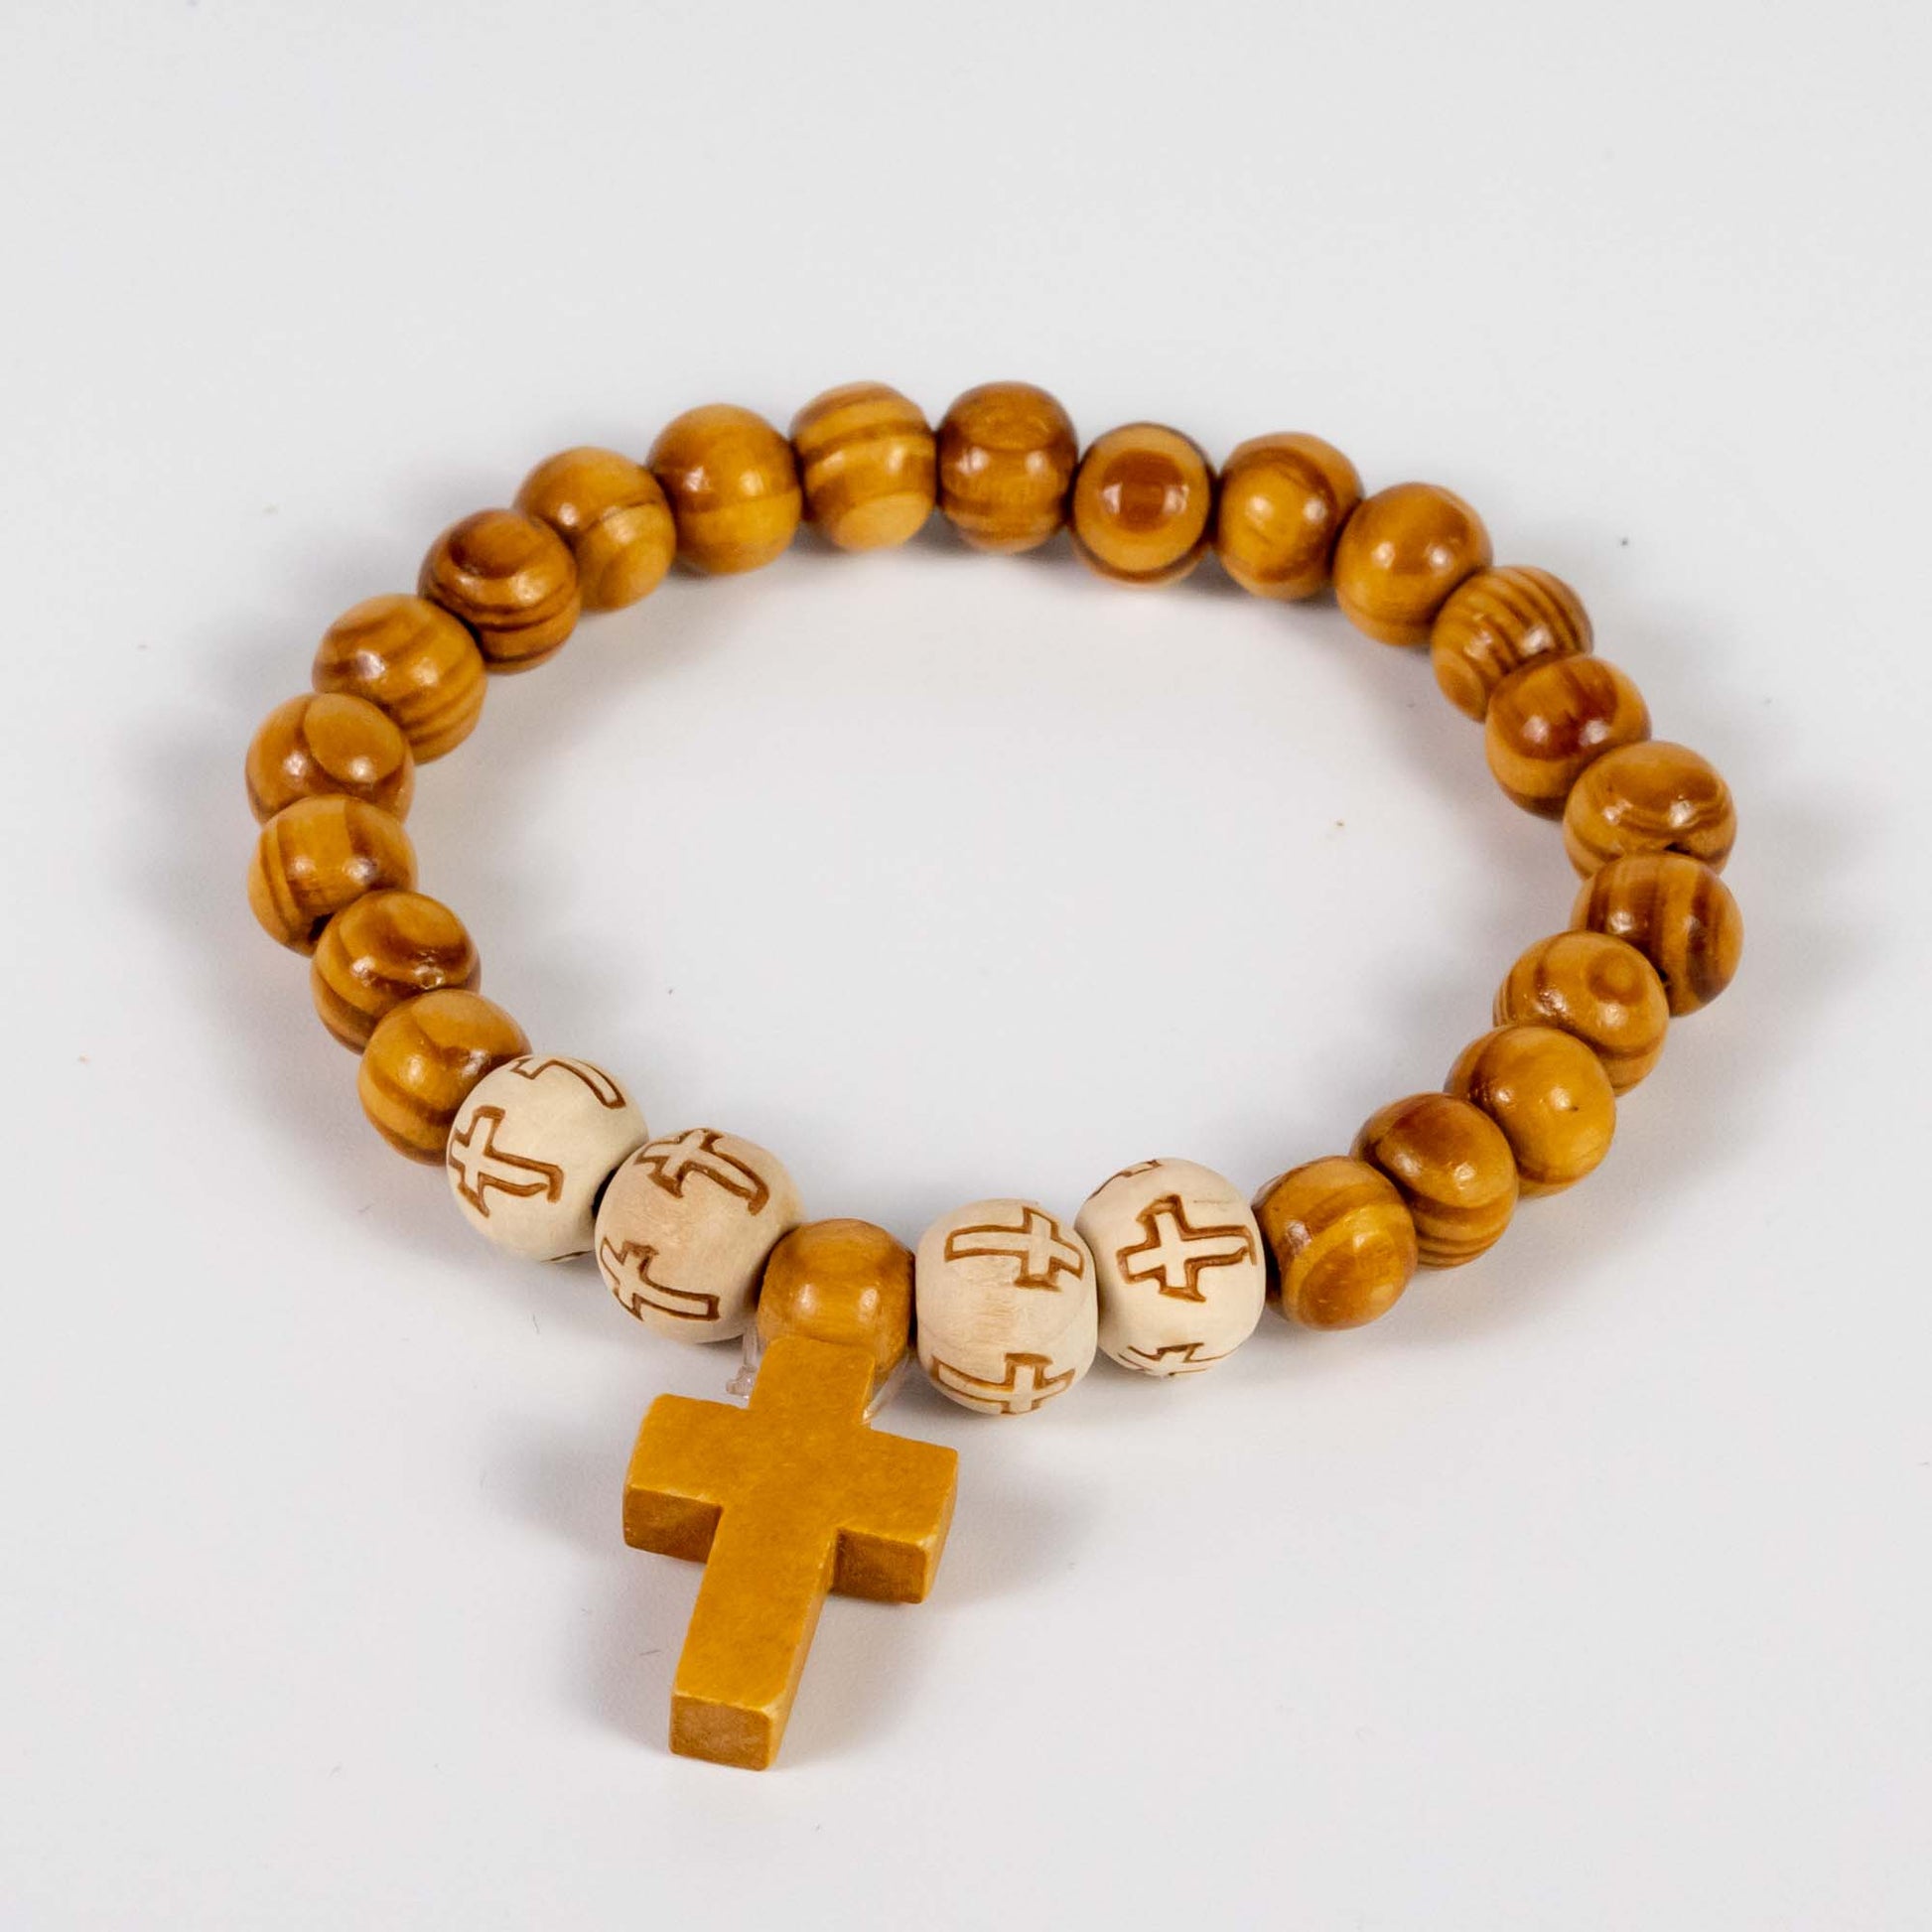 Cross Pendant, Wood & Acrylic Cross Beads Spiritual Bracelet